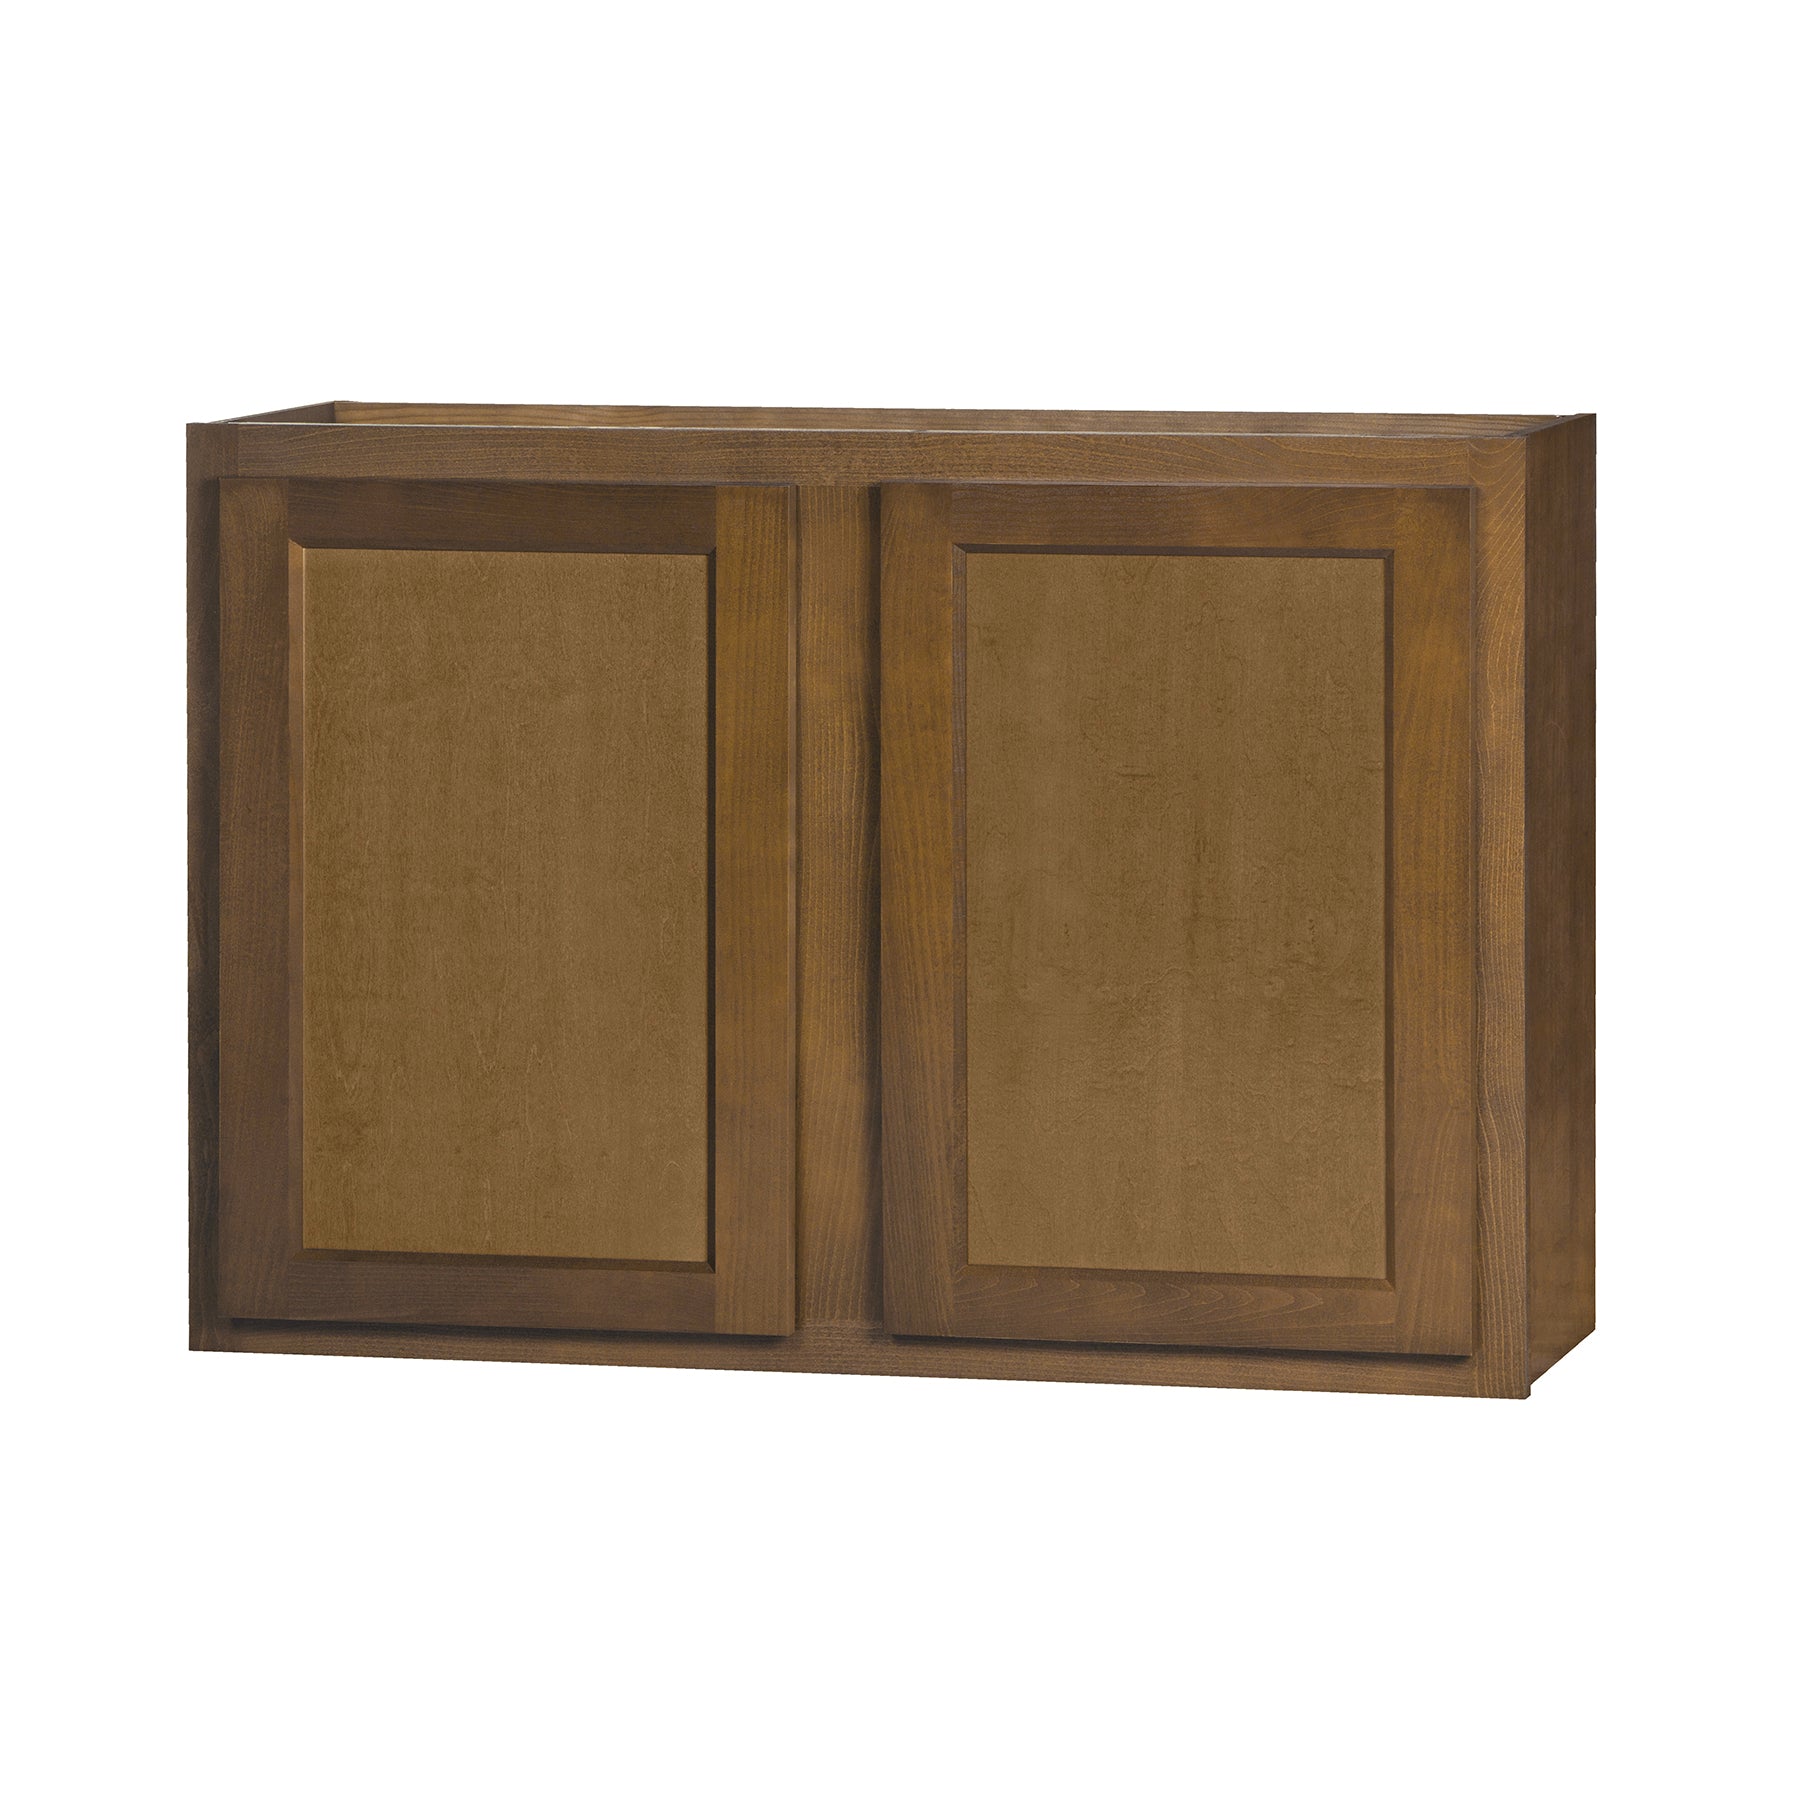 30 inch Wall Cabinets - Warmwood Shaker - 42 Inch W x 30 Inch H x 12 Inch D